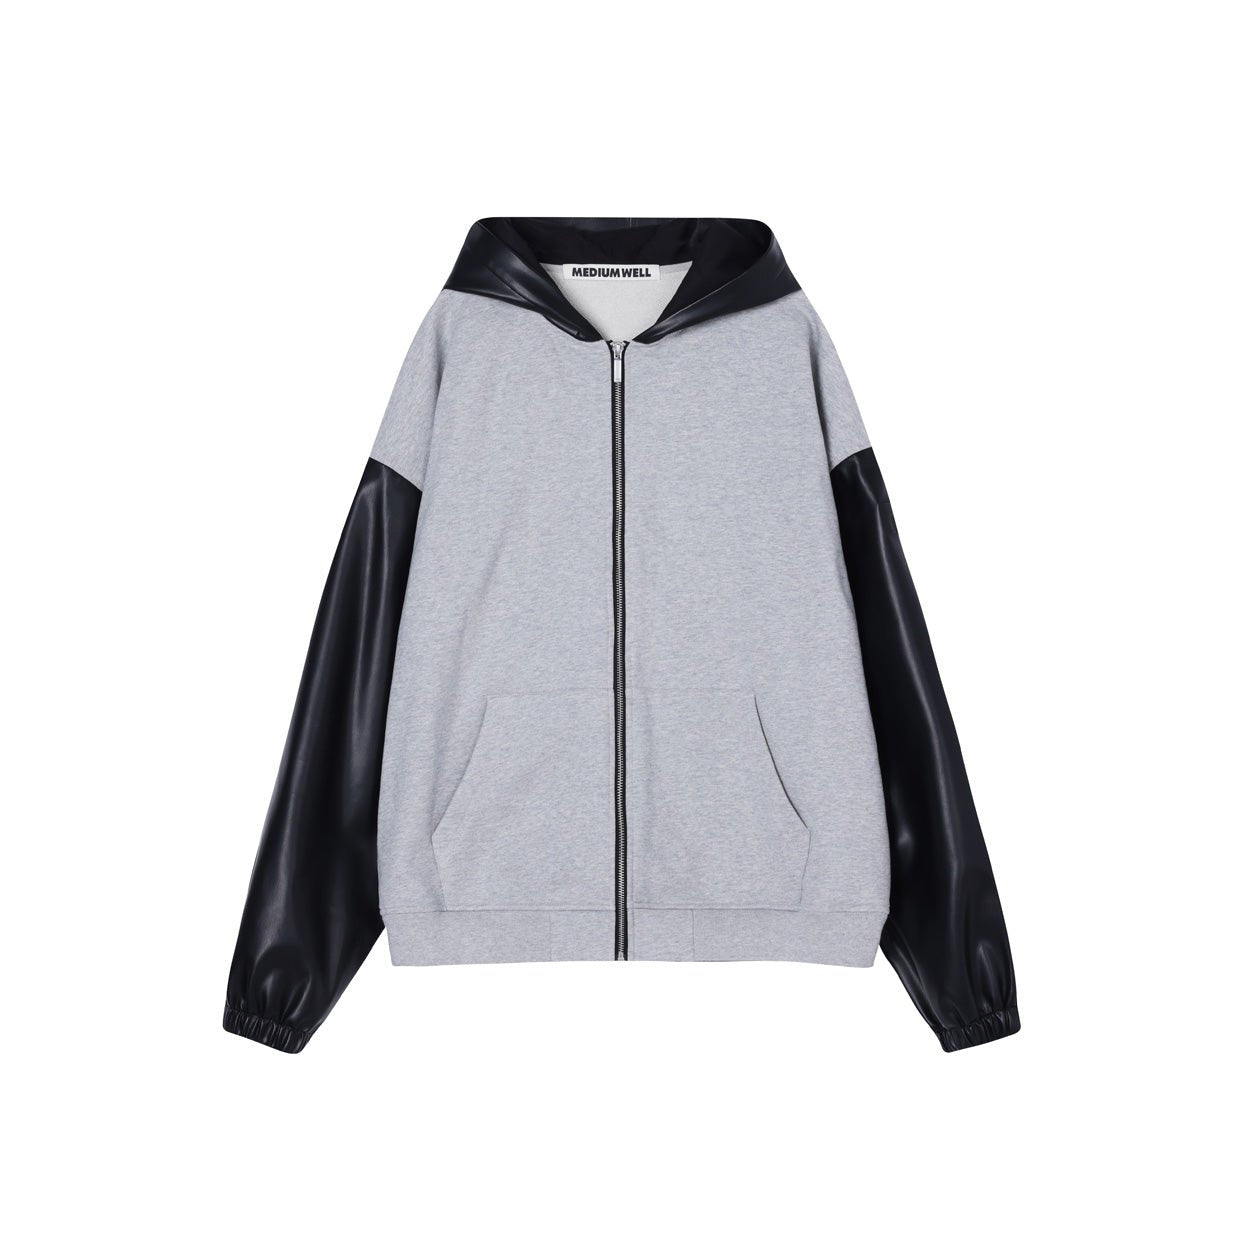 MEDIUM WELL Black And Gray Leather Sweatshirt Jacket | MADA IN CHINA